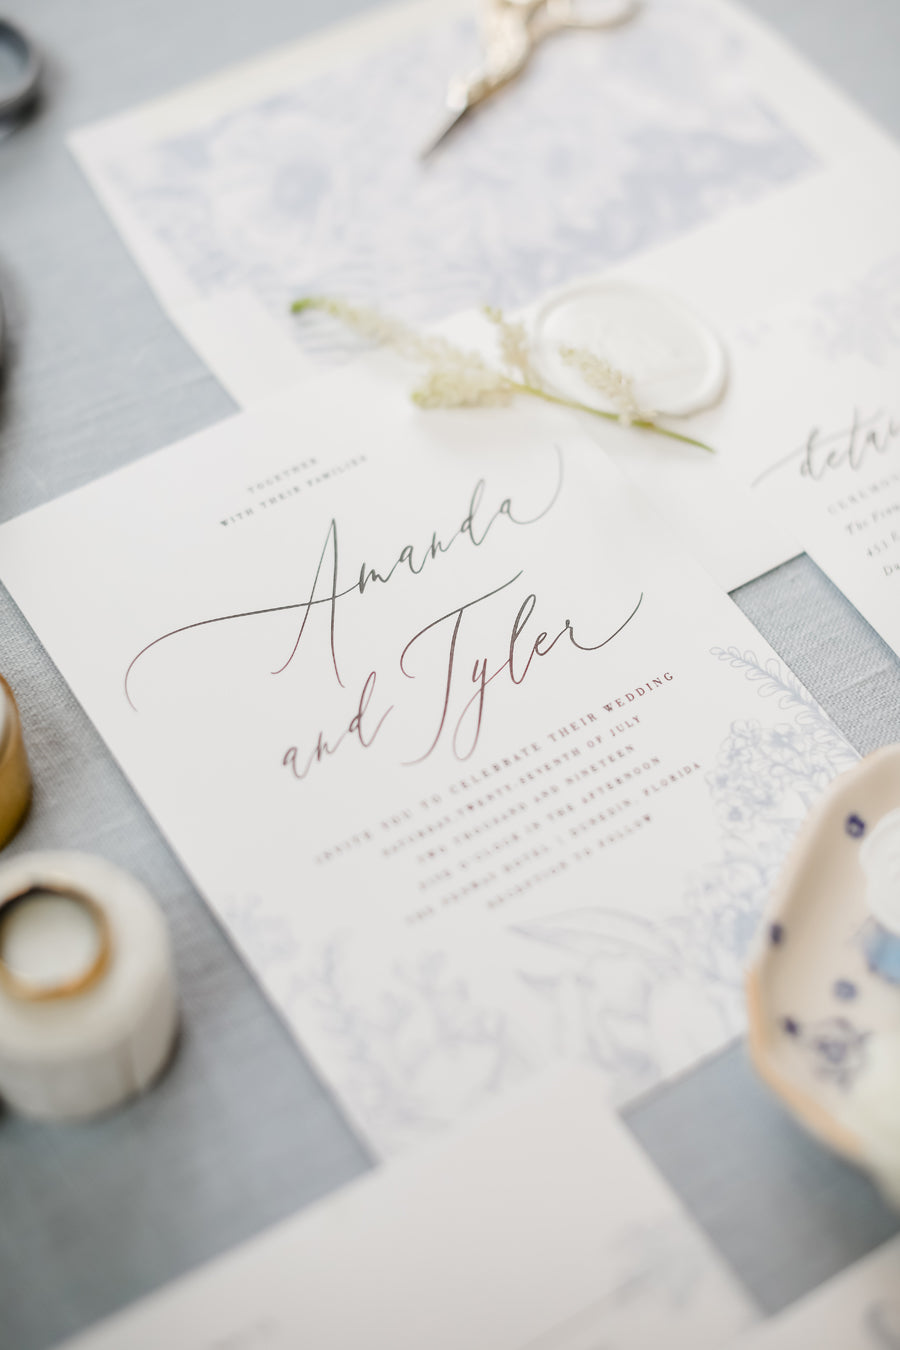 Blue wedding inspiration Citrus Press Co. Invitation Card Stationery